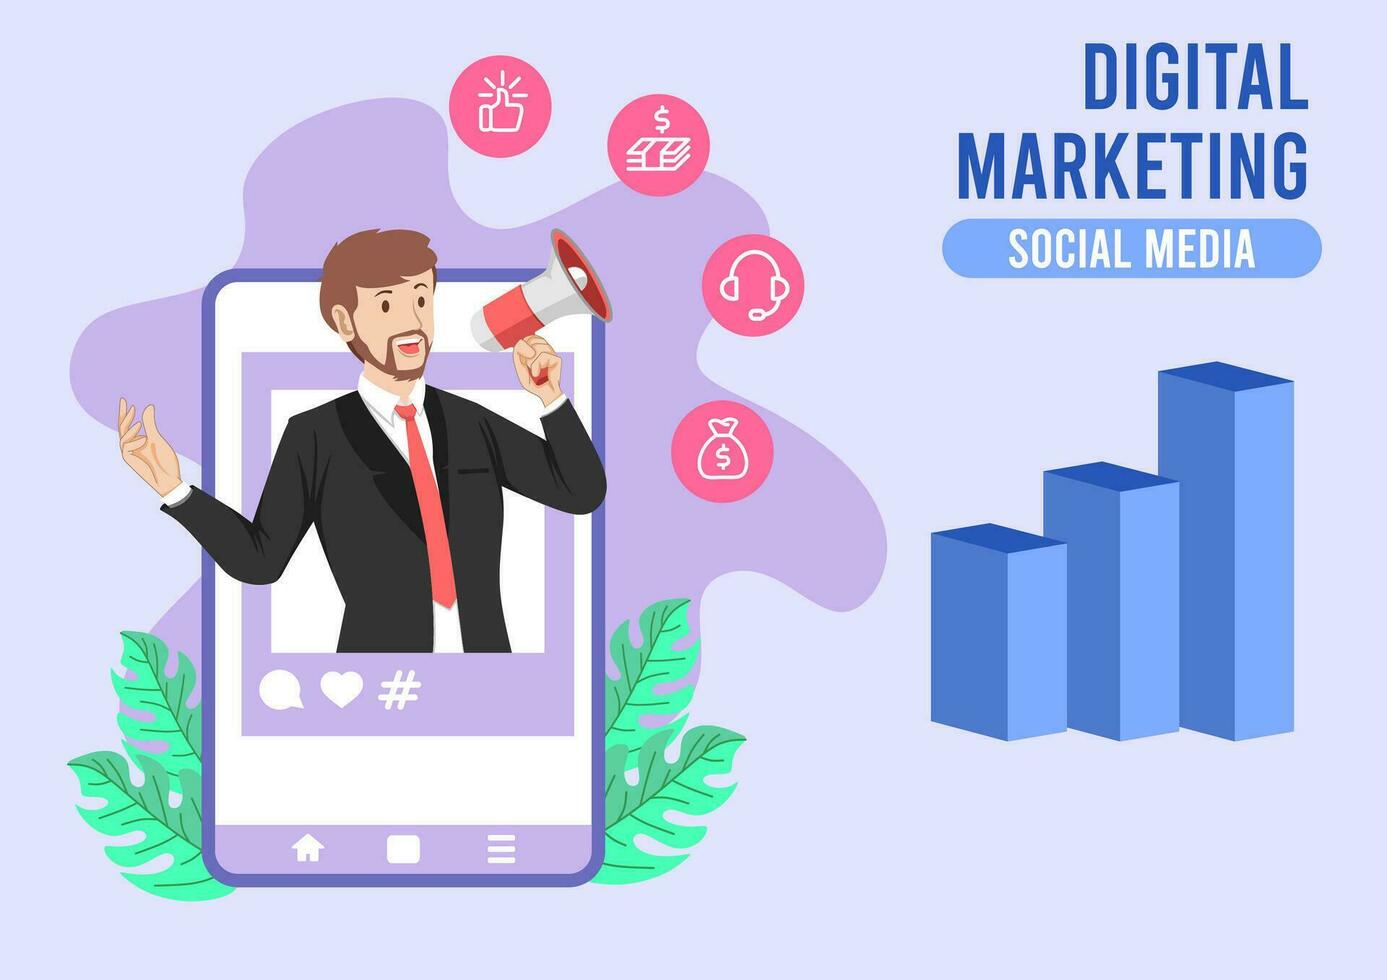 Digital marketing social media banner concept with man holding megaphone vector illustration